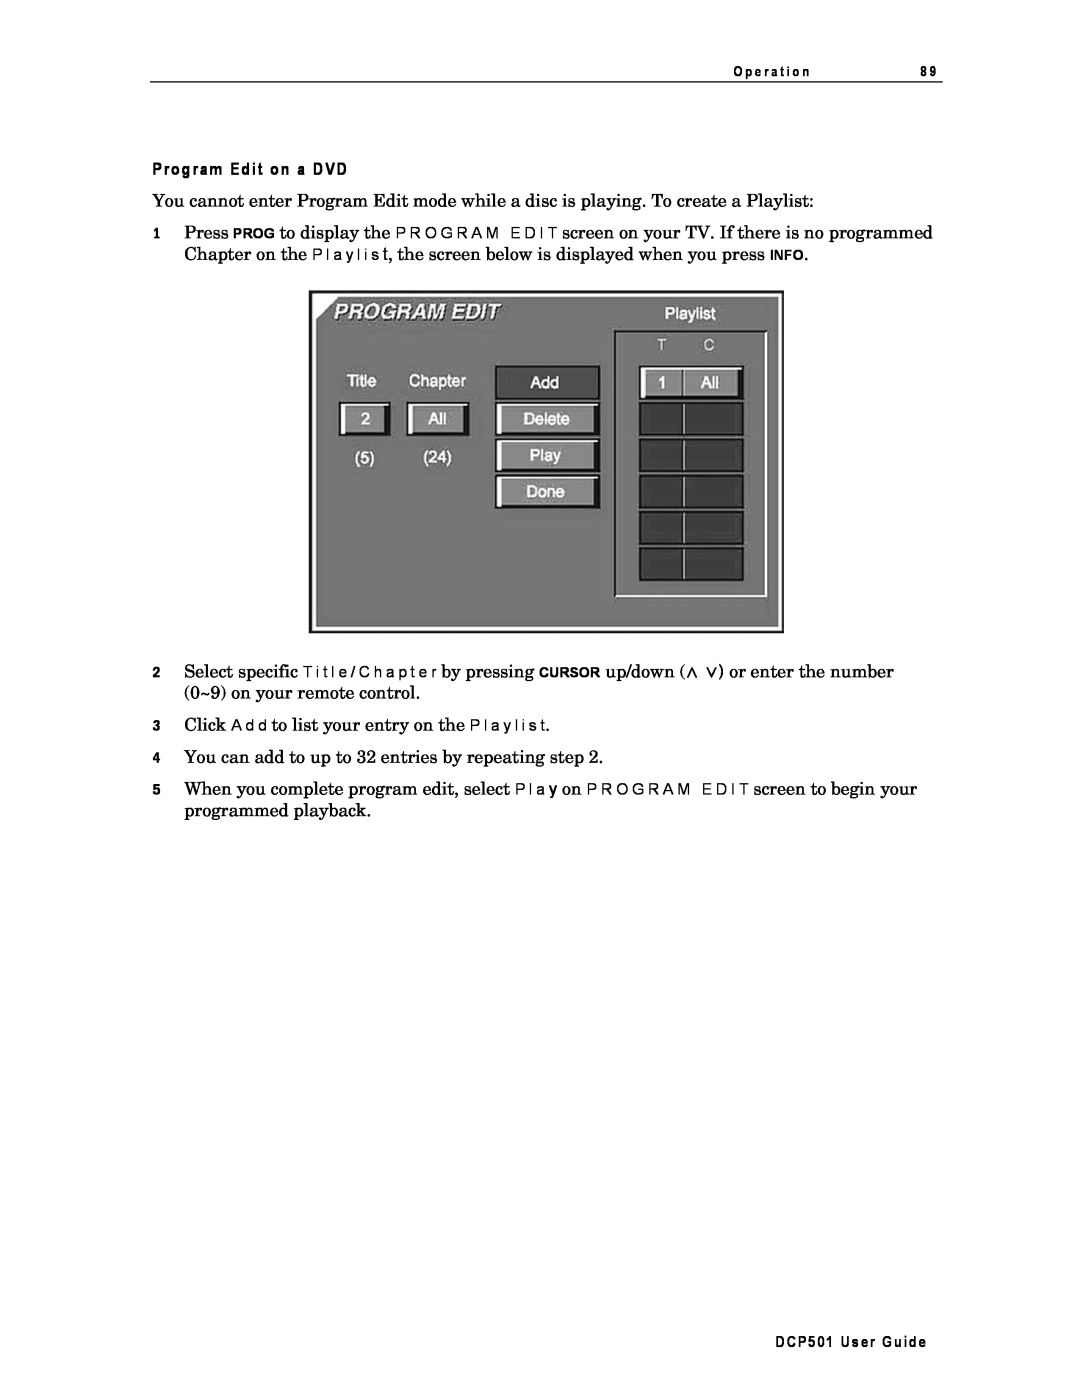 Motorola DCP501 manual Program Edit on a DVD 